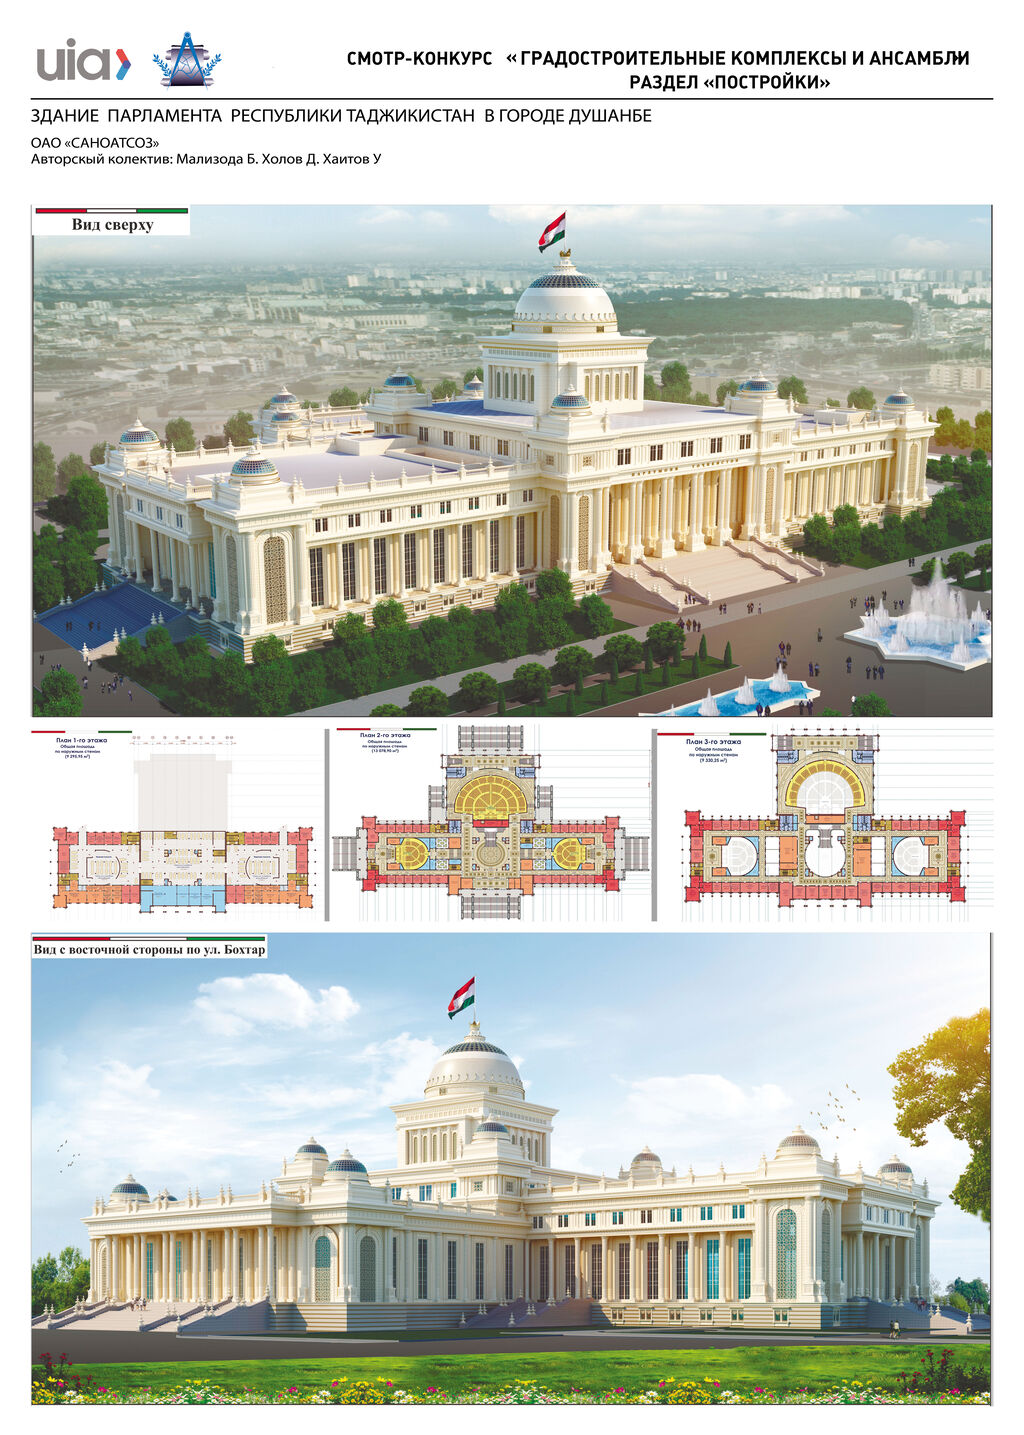 45.Здание Парламента Республики Таджикистана